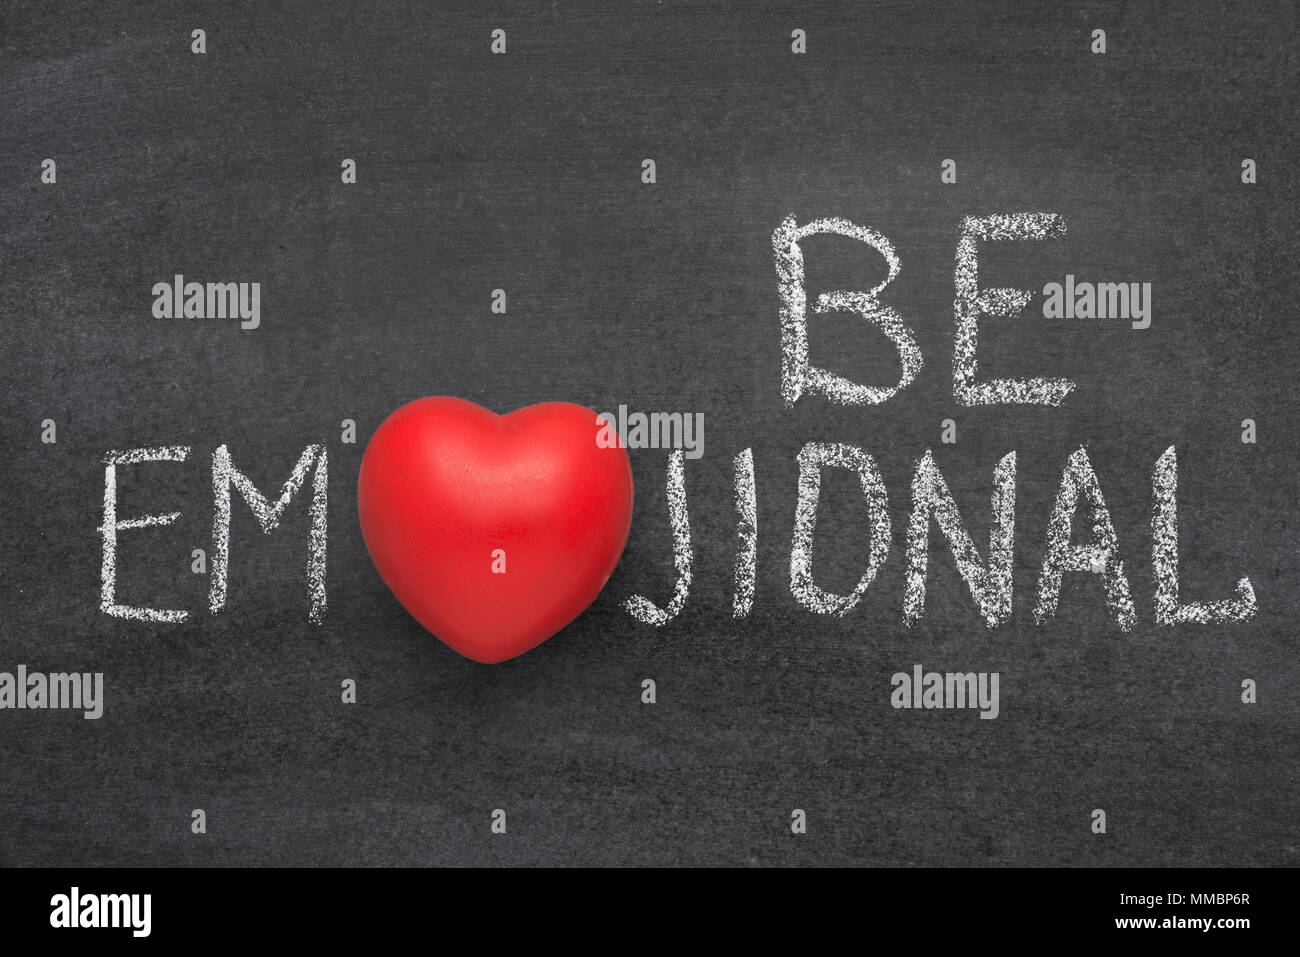 be emojional phrase handwritten on blackboard with heart symbol instead of O Stock Photo